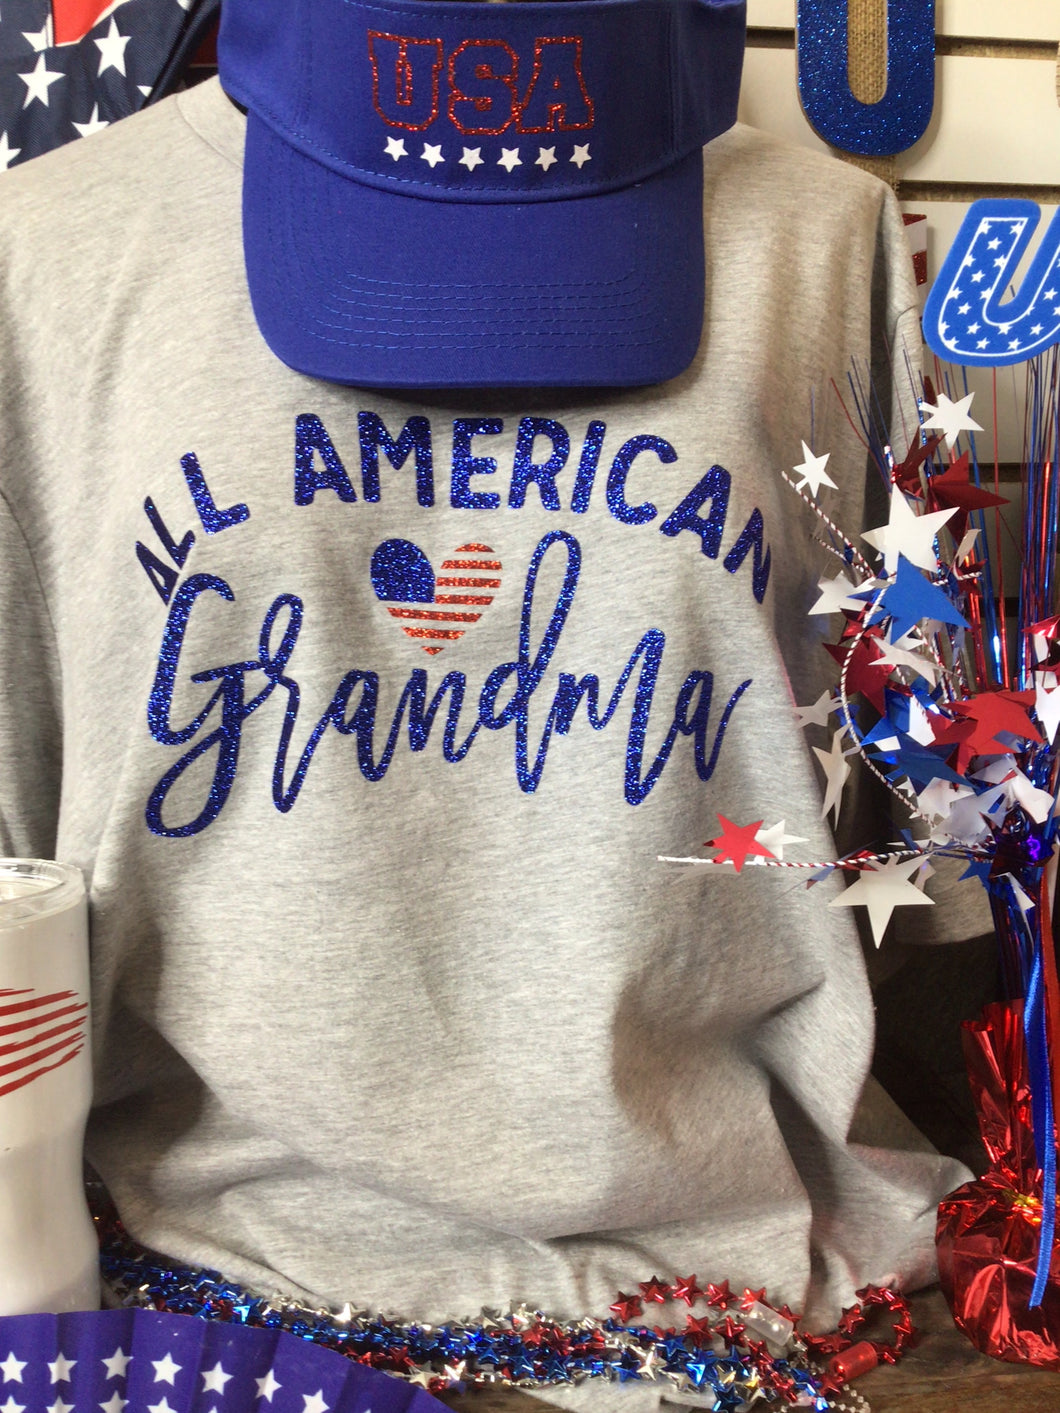 All American Grandma Shirt